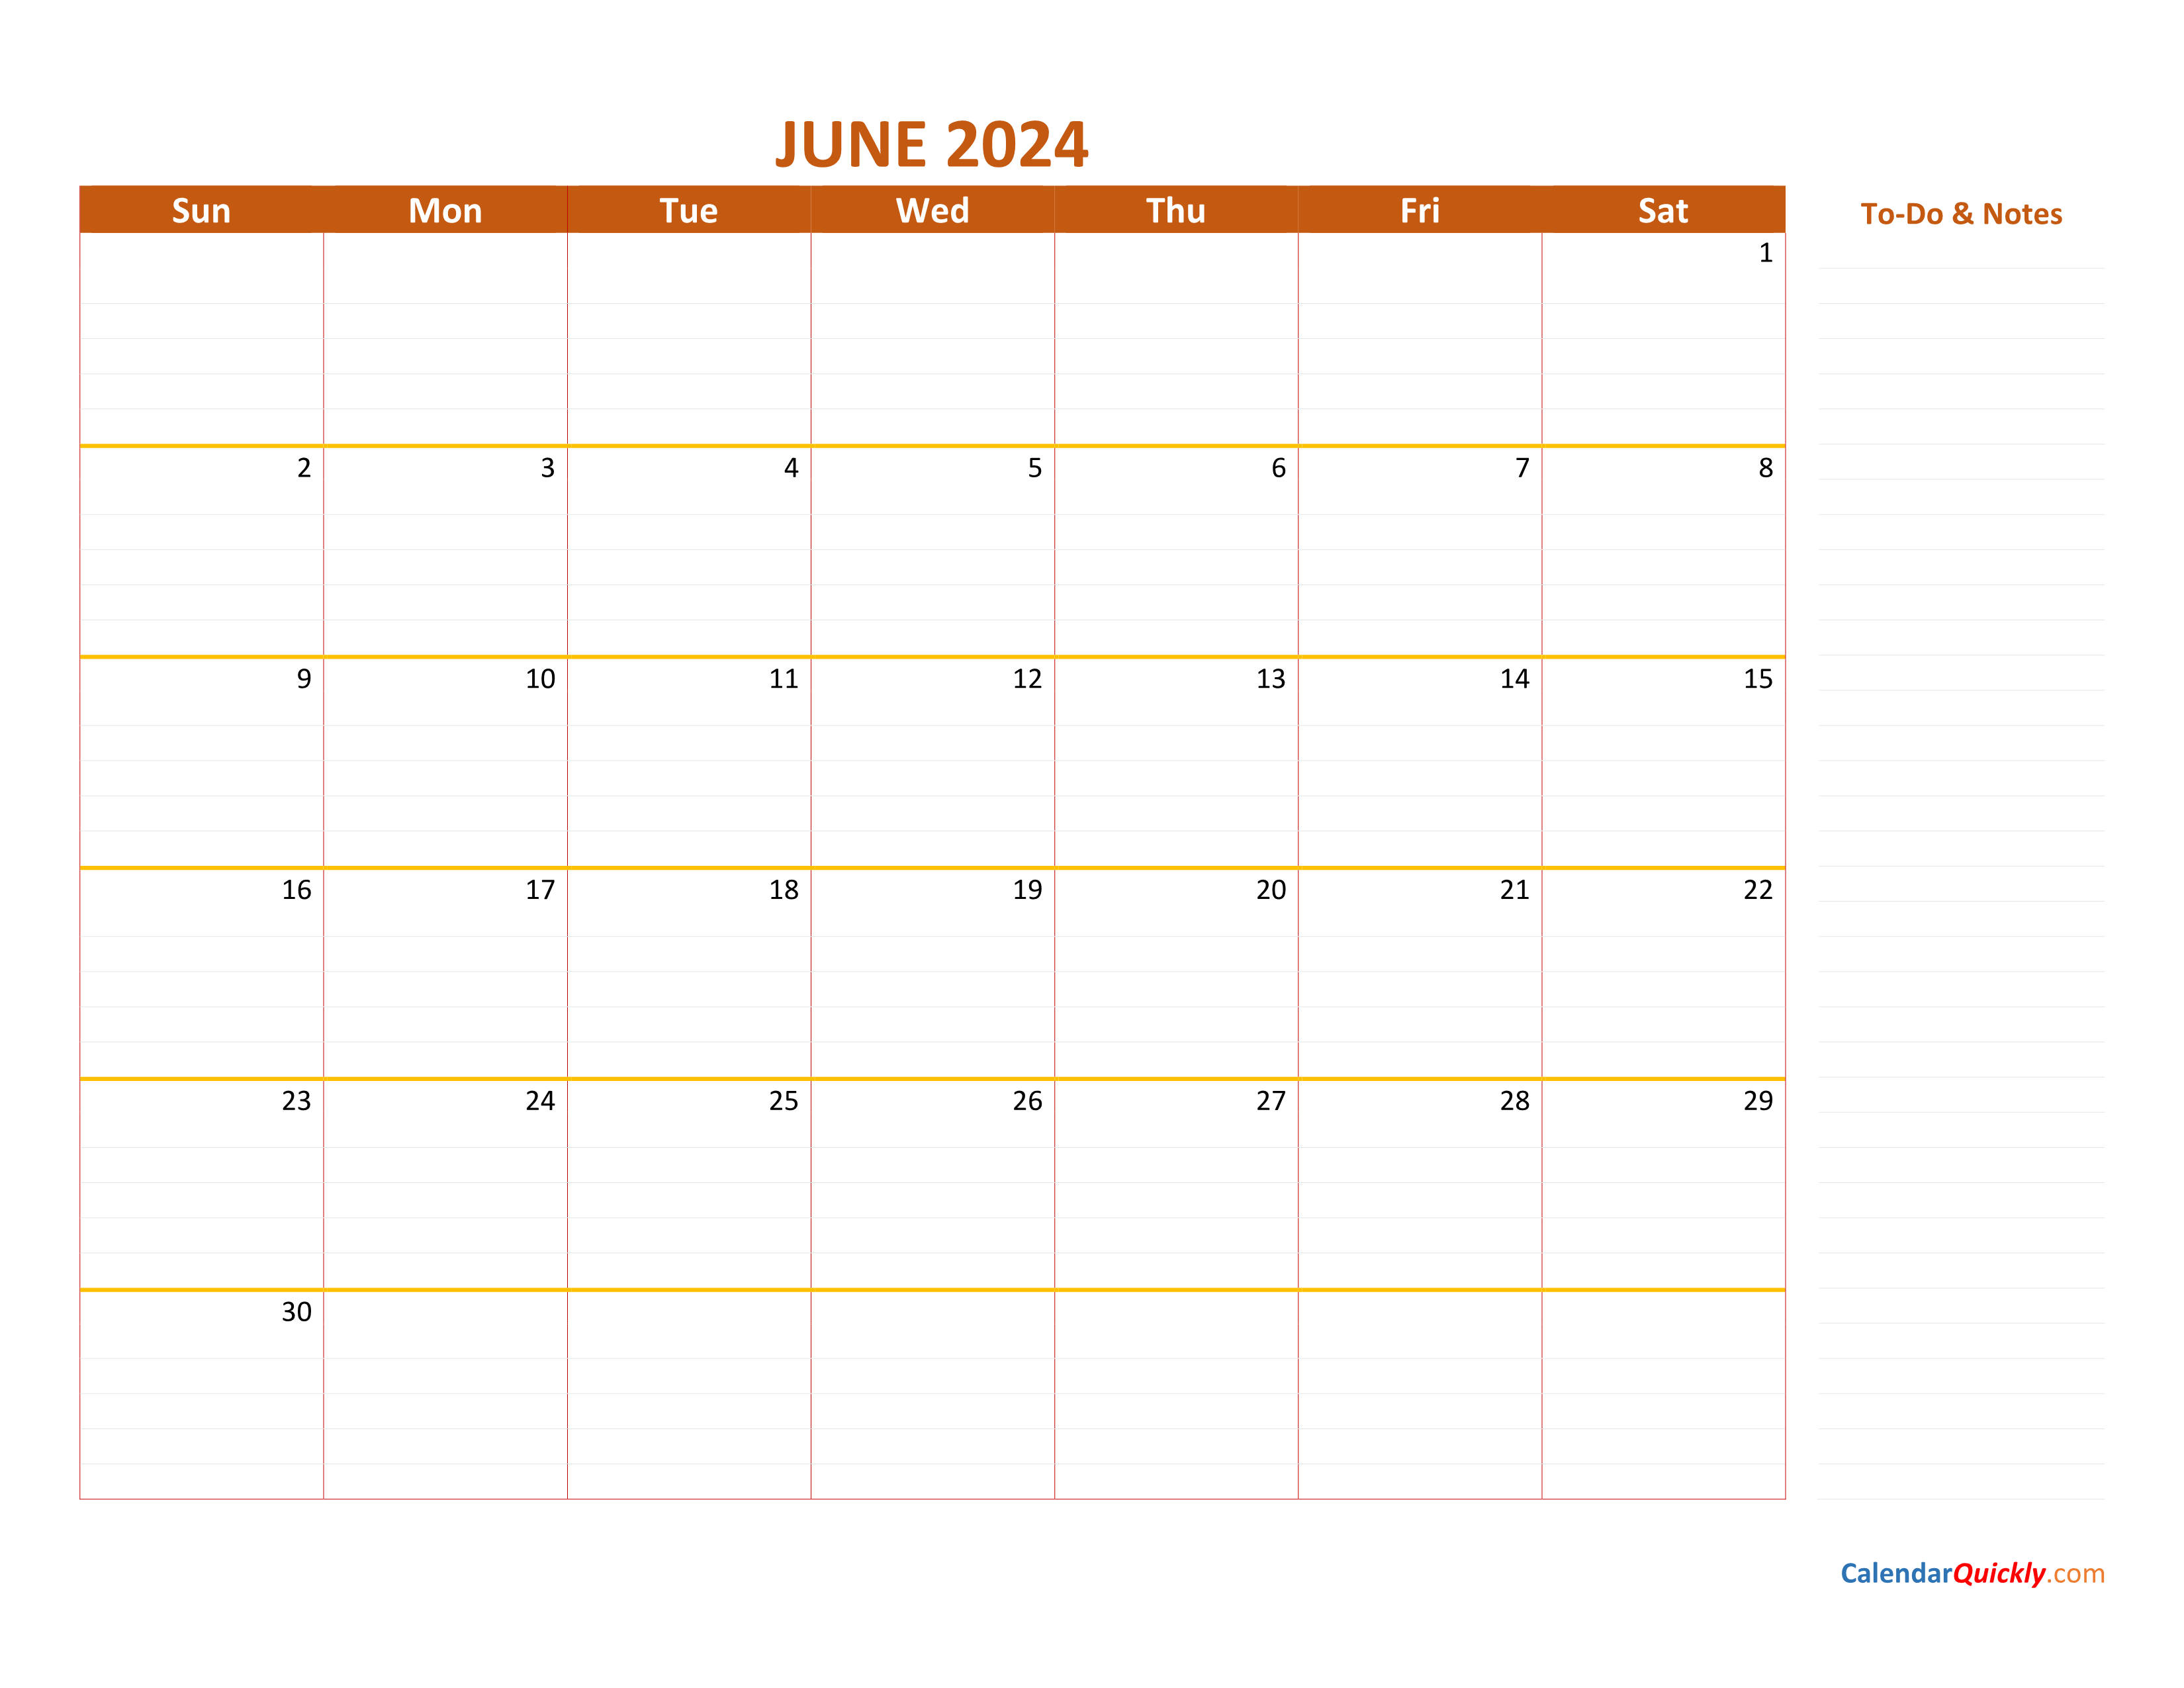 June 2024 Calendar Calendar Quickly